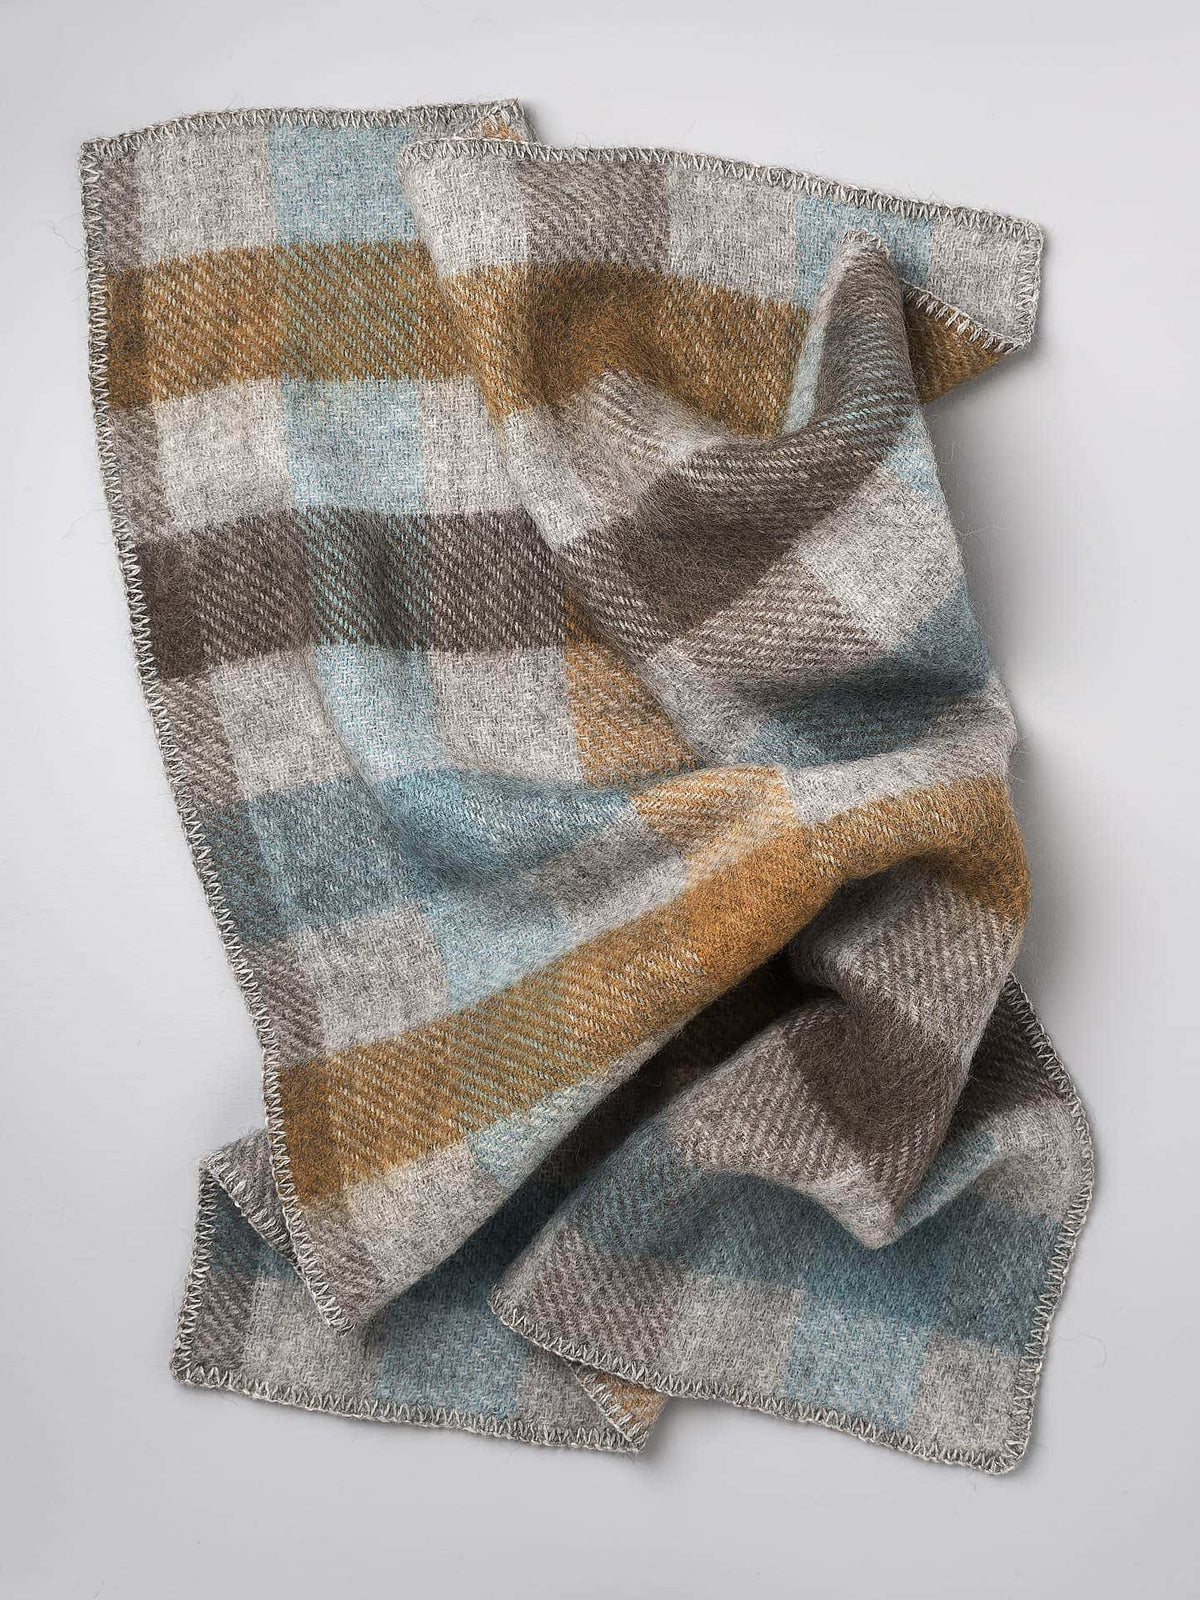 A Klippan Gotland Wool Baby Throw – Multi Turquoise blanket on a white surface.